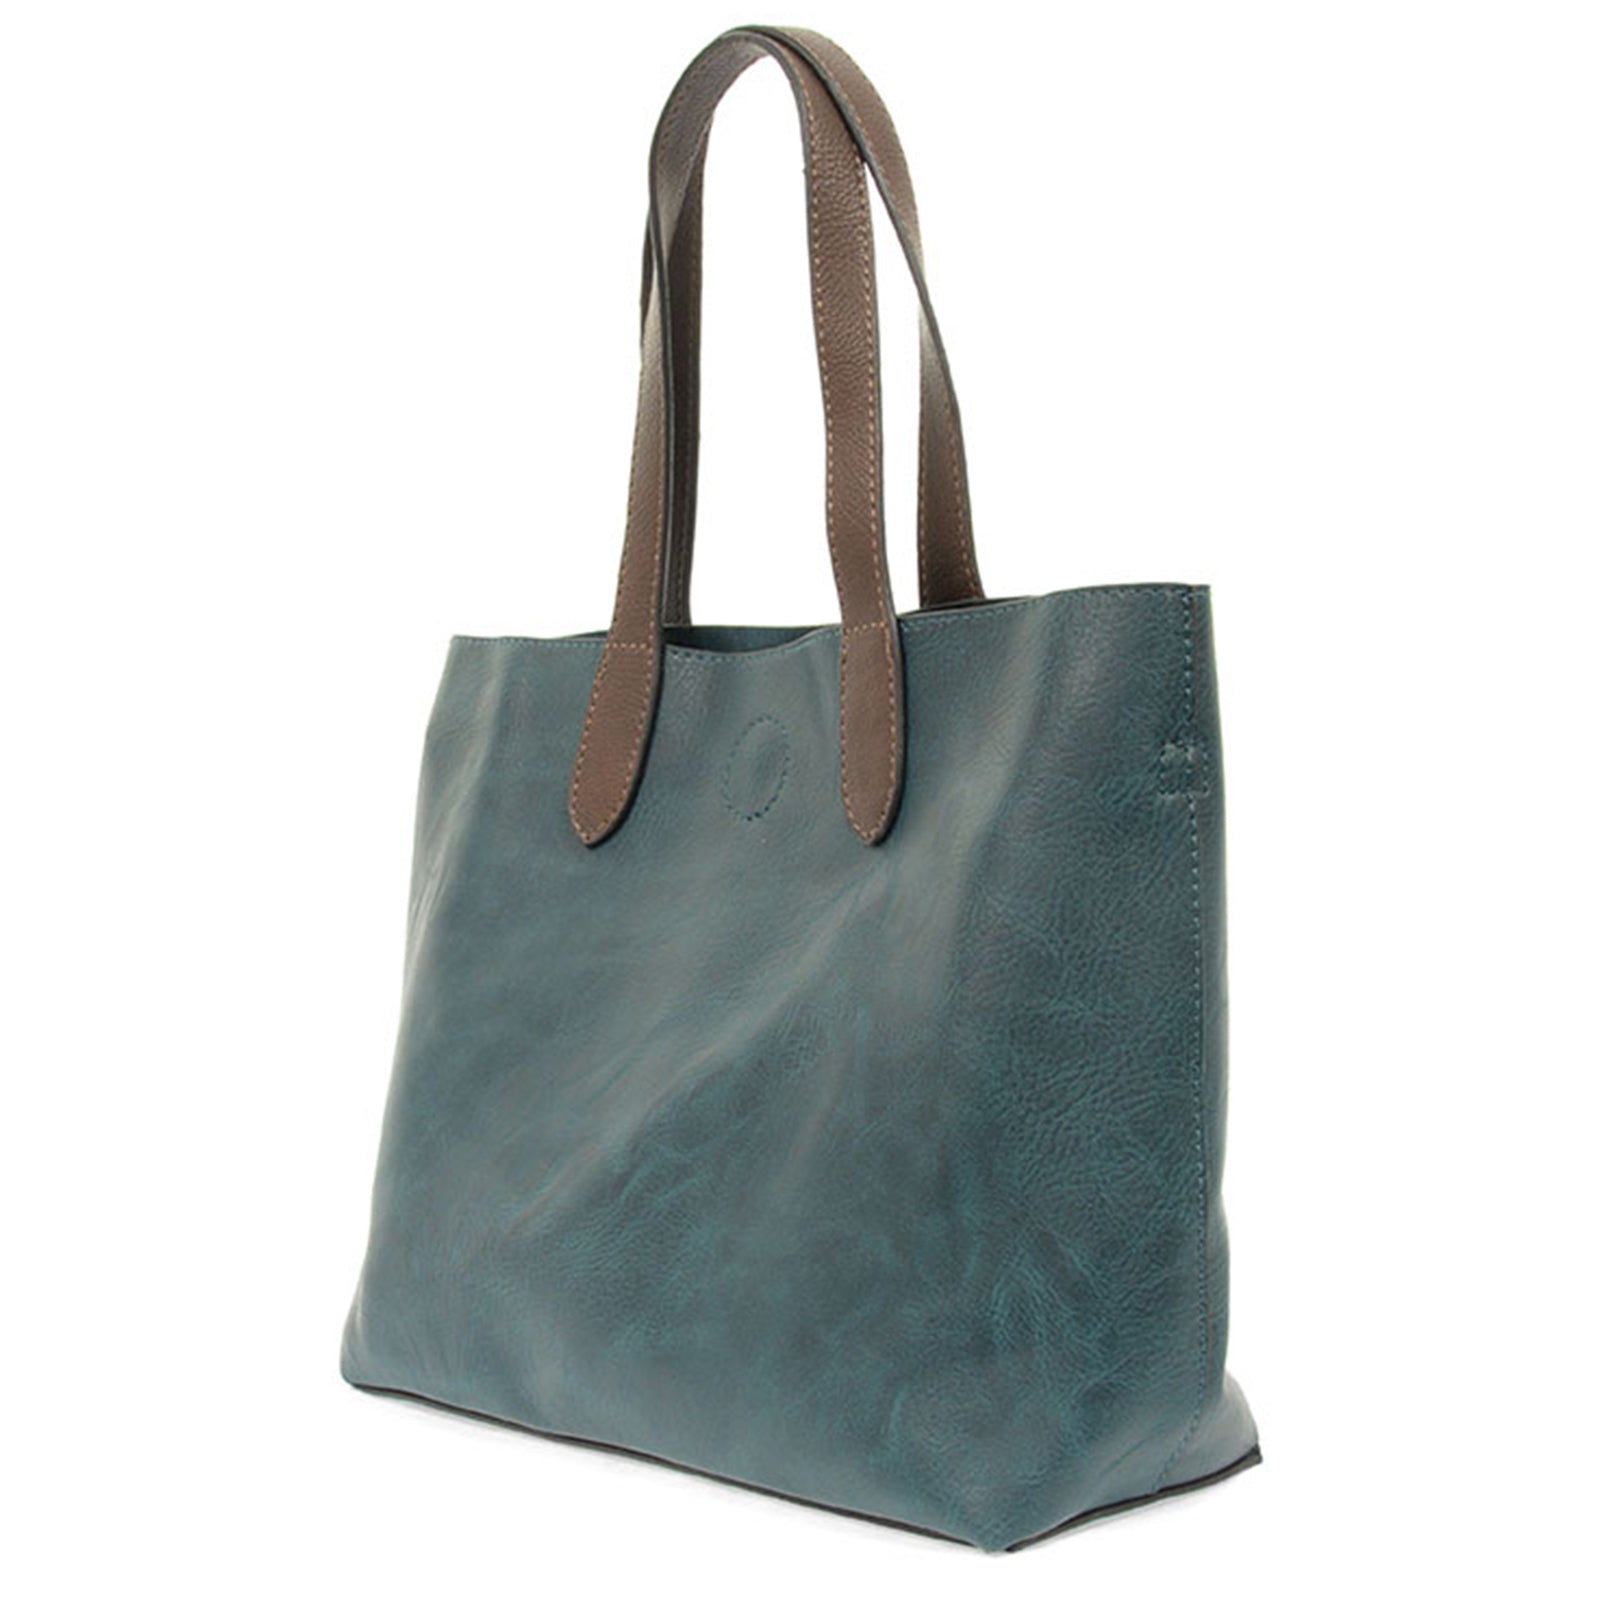 Joy Accessories Mariah handbag dark turquoise angled view